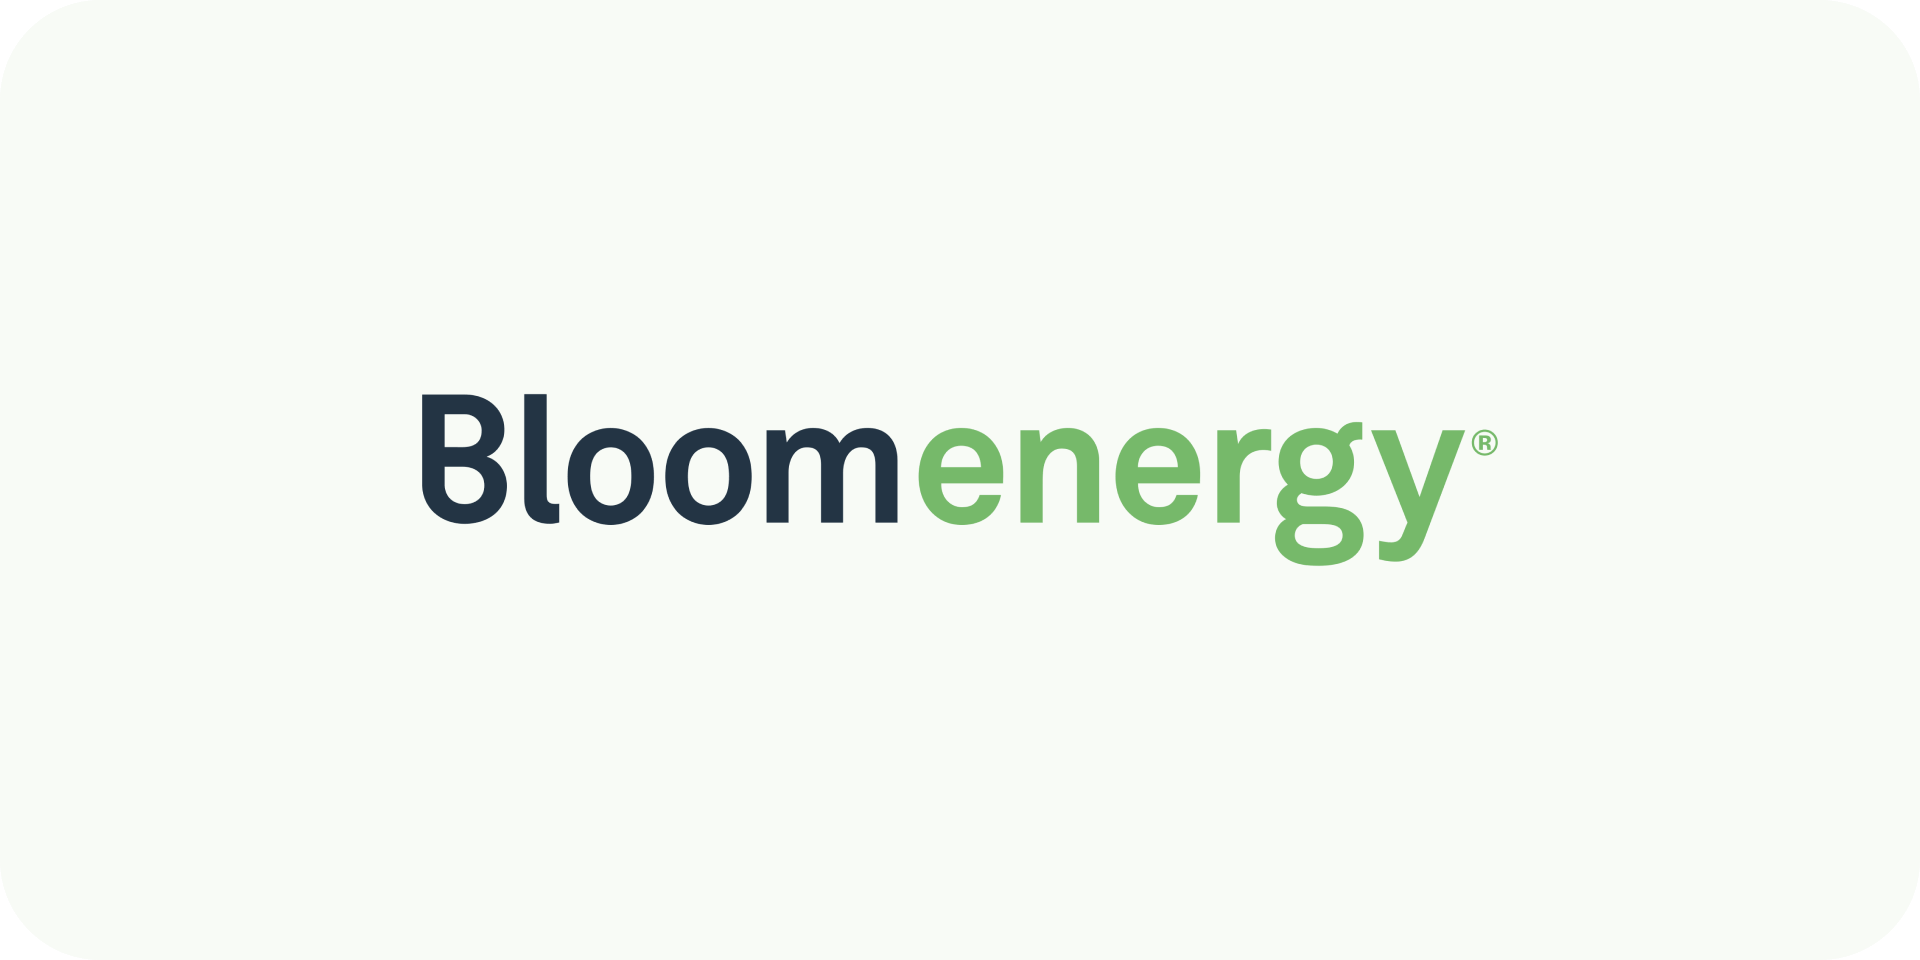 Bloomenergy logo